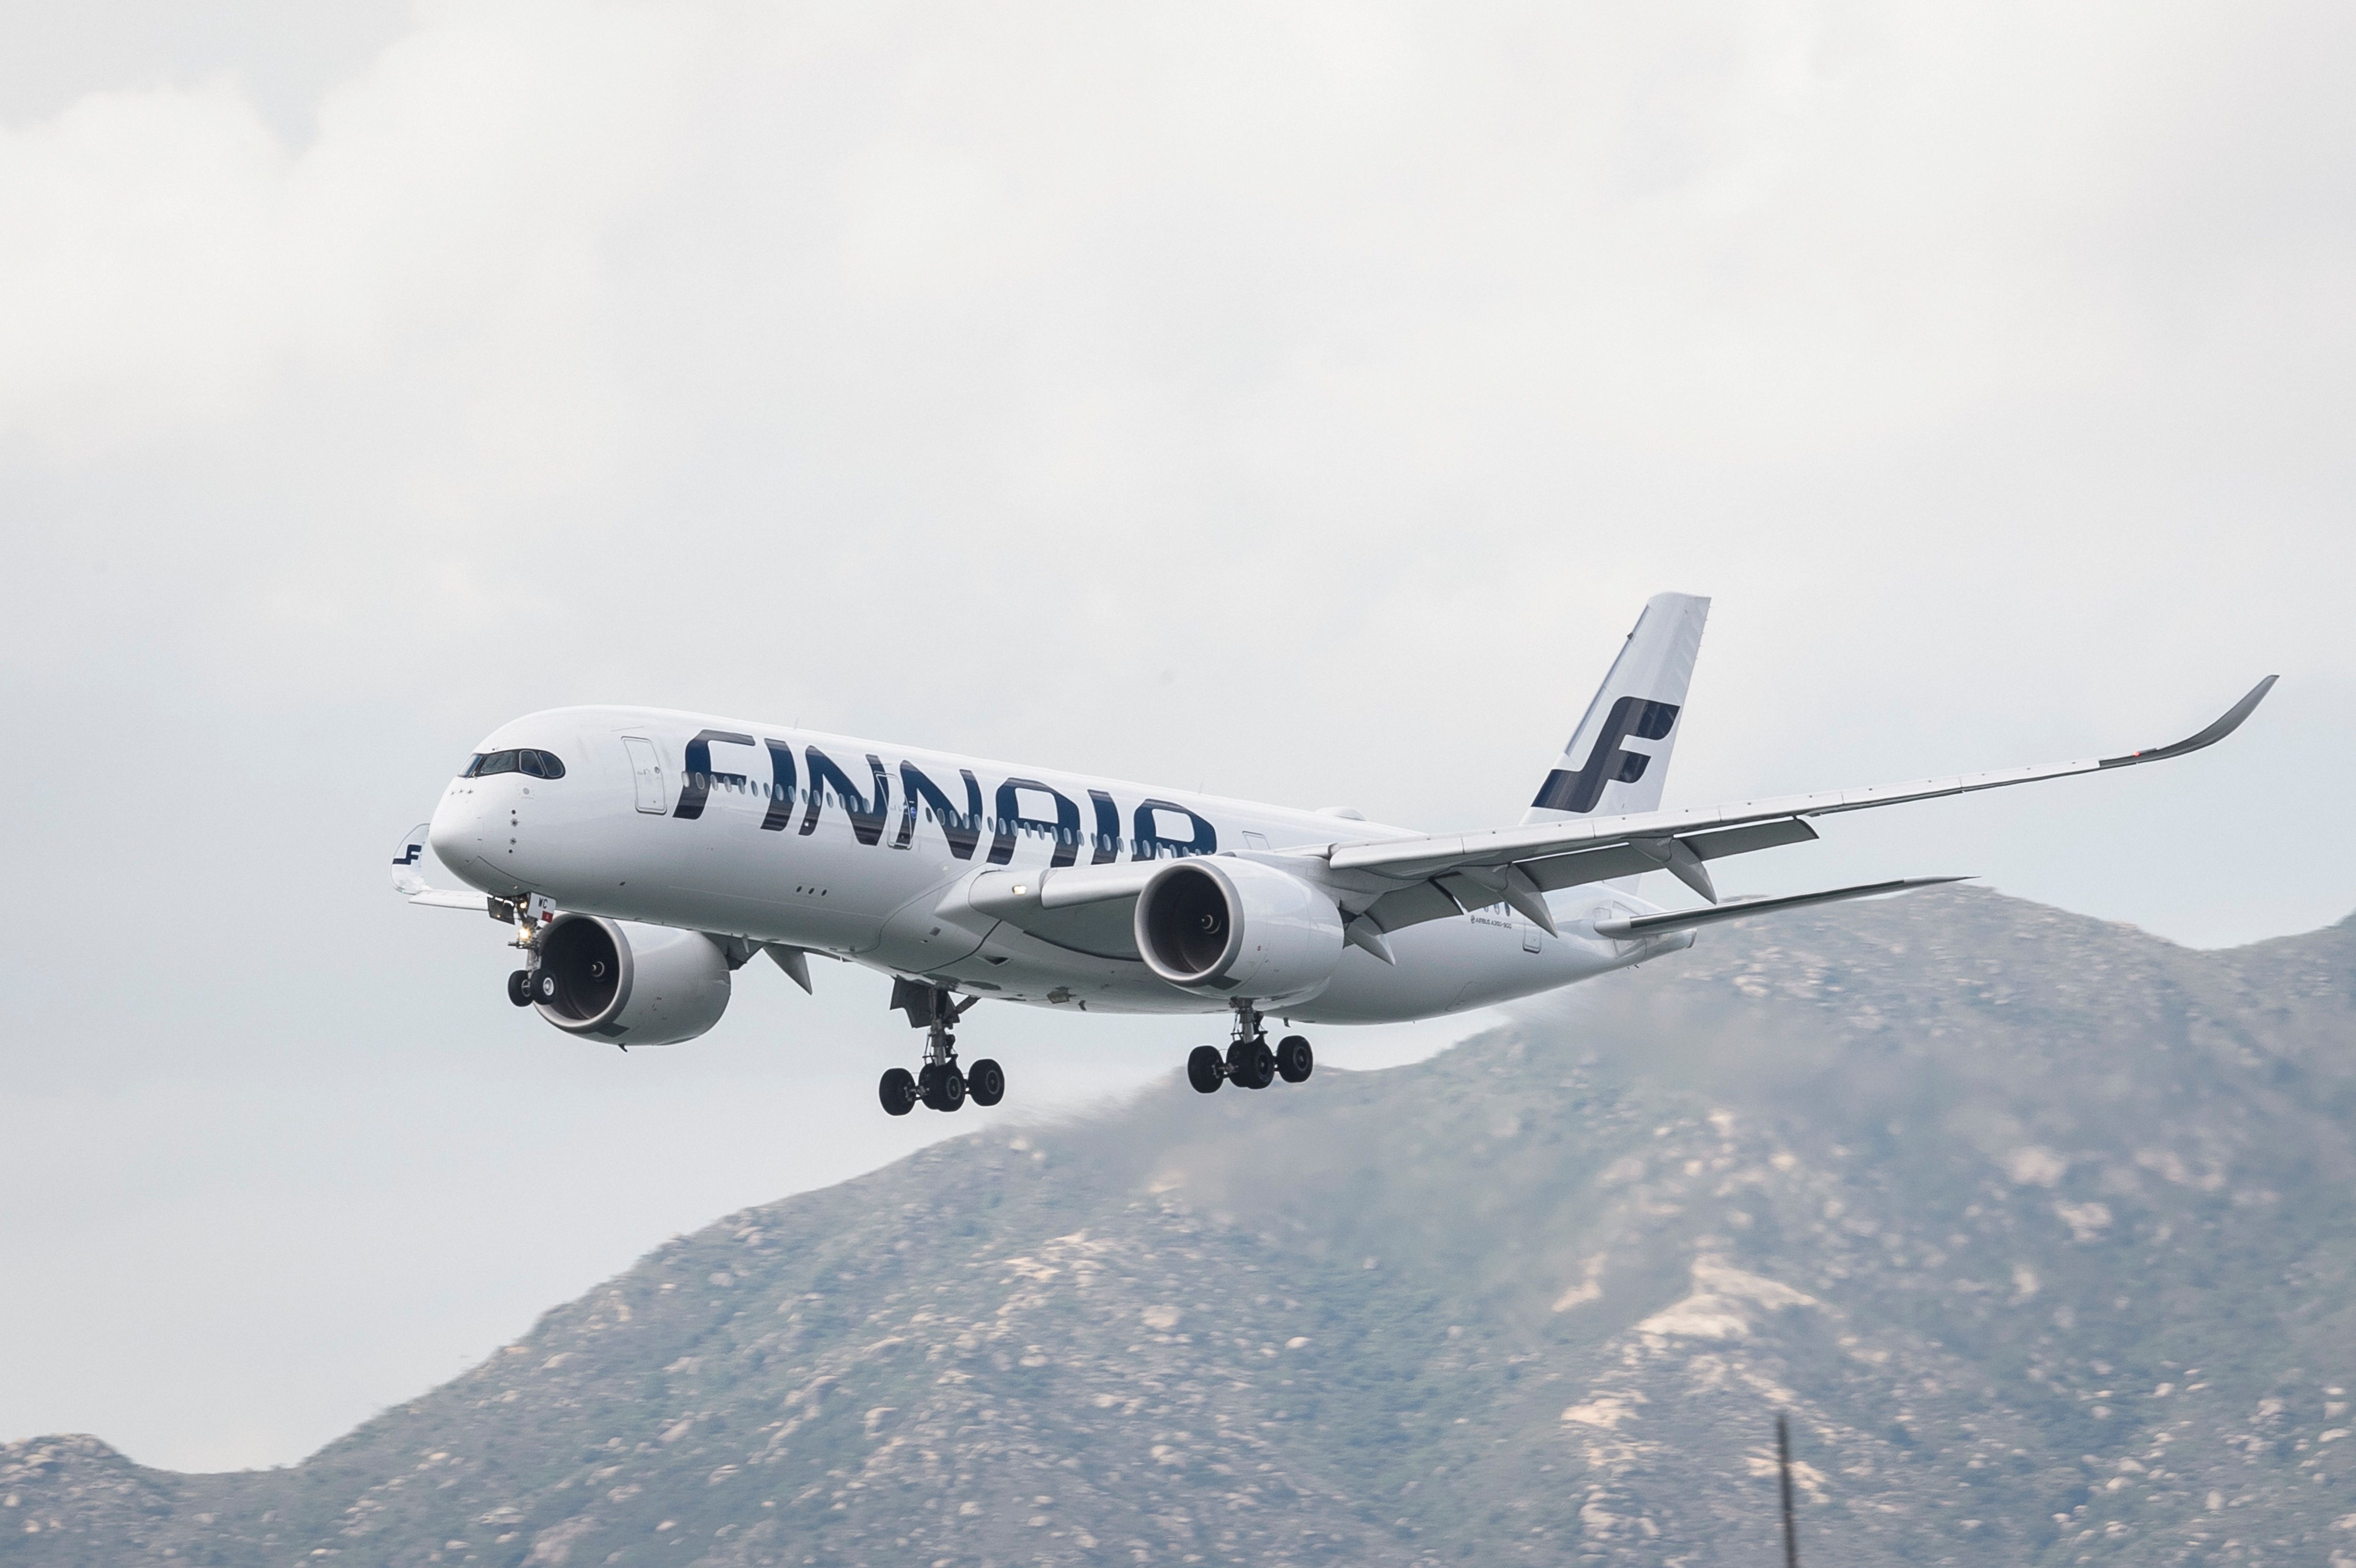 Finnair plane coming in for landing 